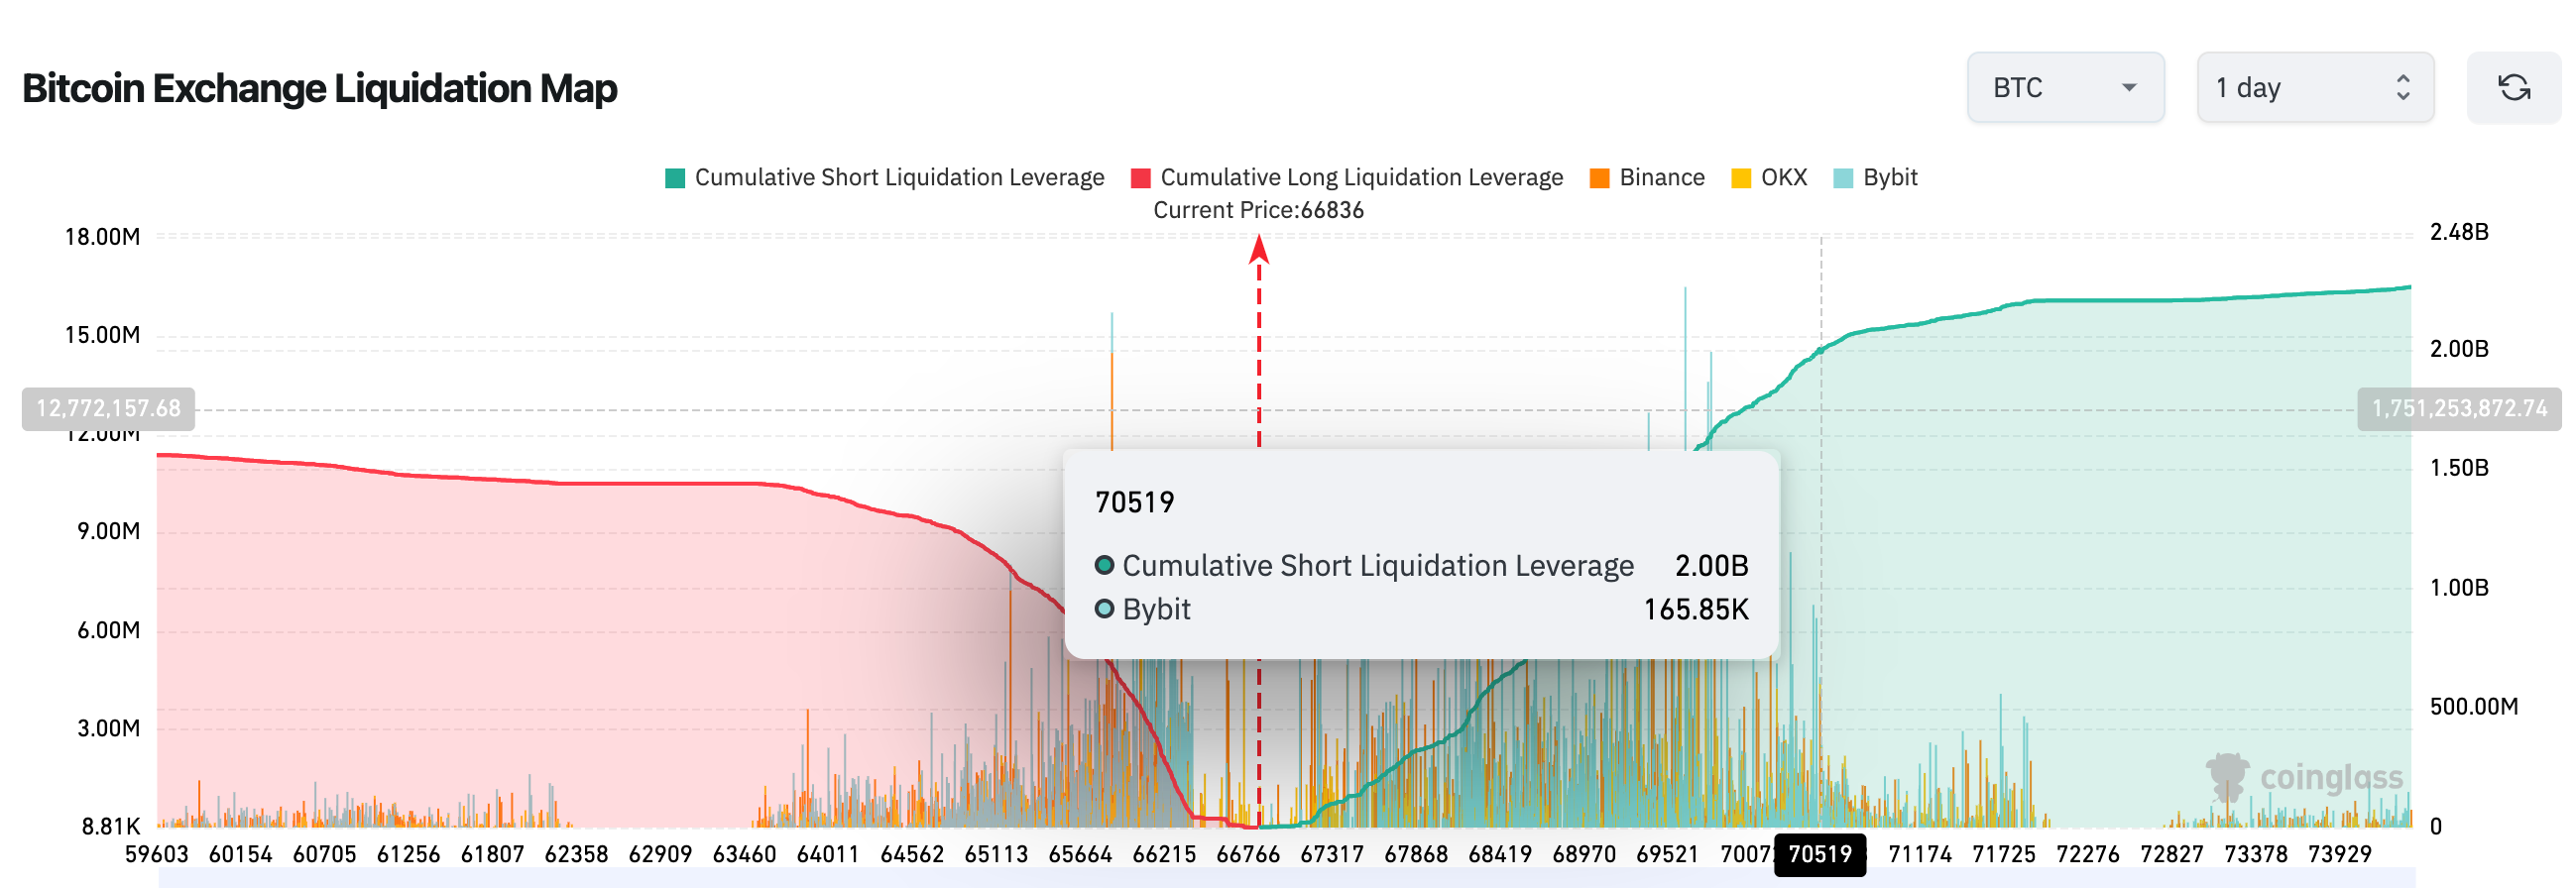 Bitcoin (BTC) Price Forecast | Liquidation Heatmap | Source: Coinglass